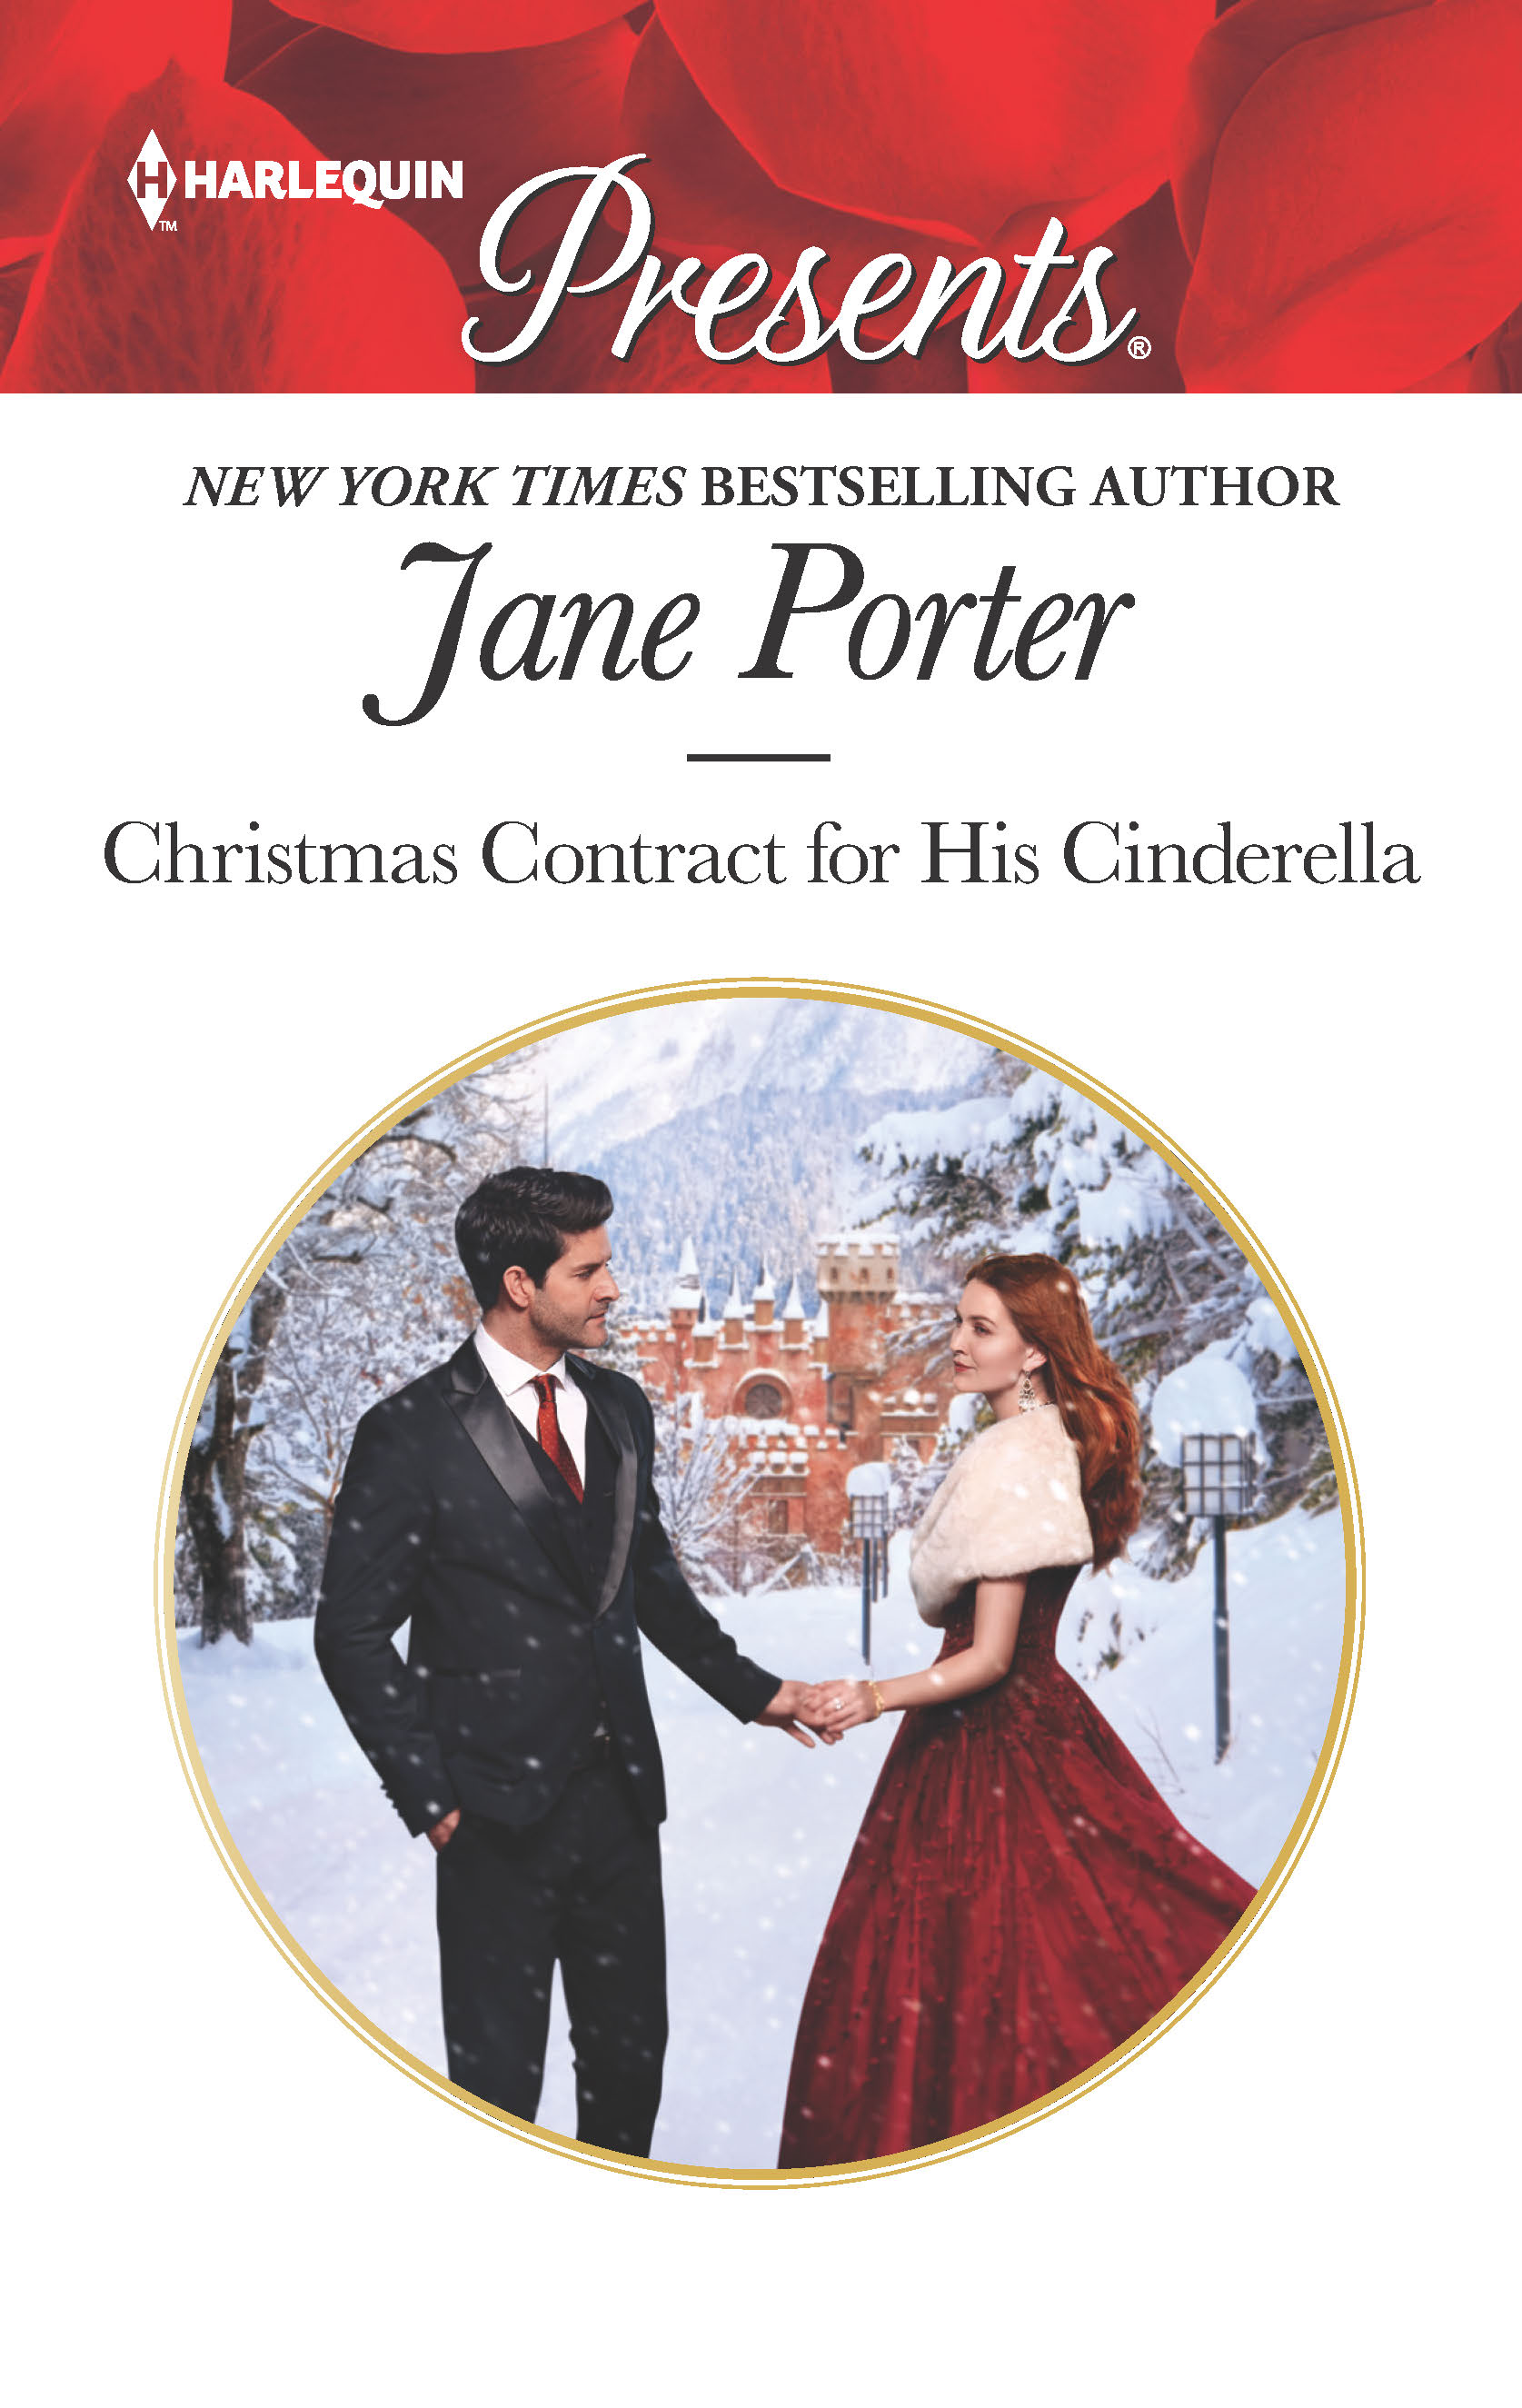 A Jane Porter easy-DIY Printable Christmas Ornament